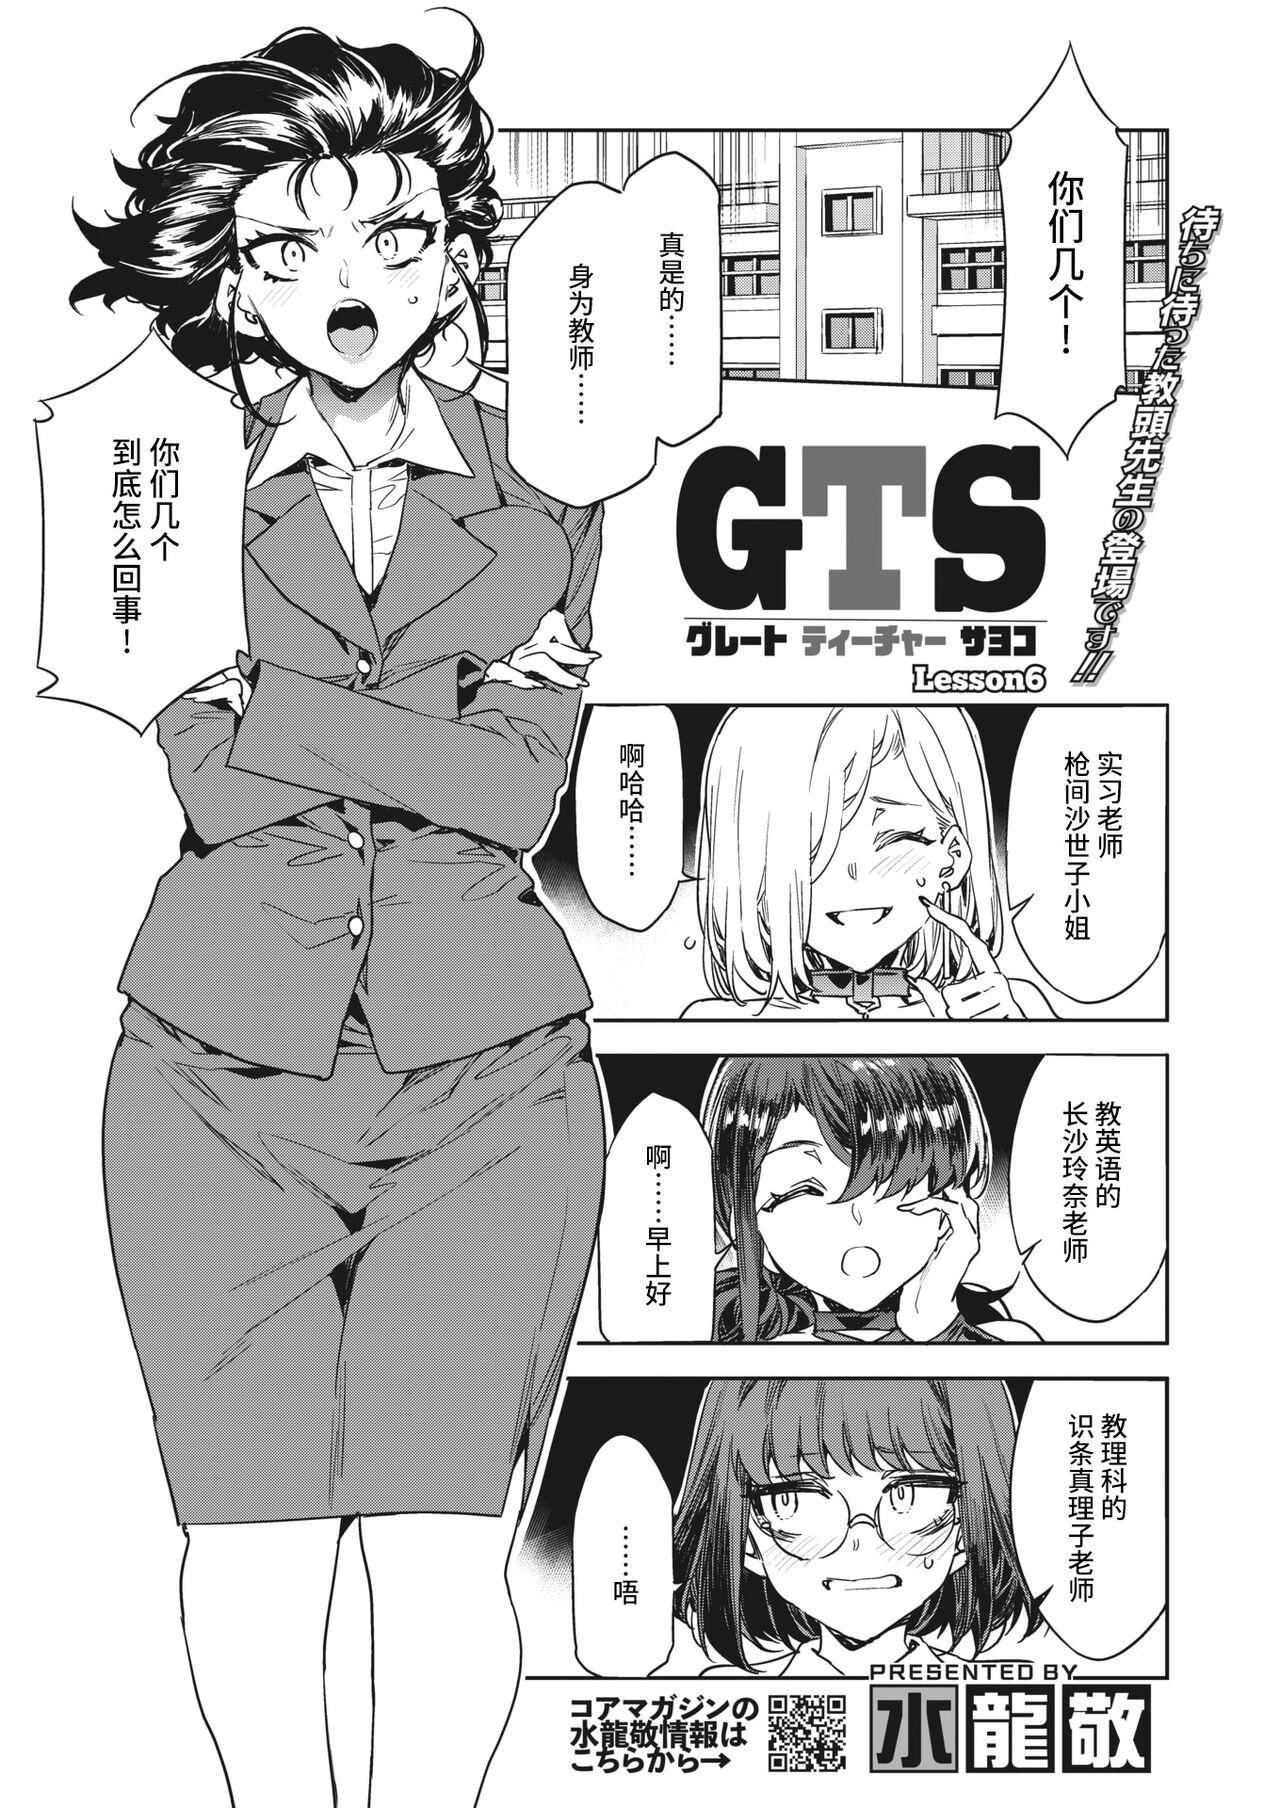 Weird GTS Great Teacher Sayoko Lesson 6 Peitos - Page 1